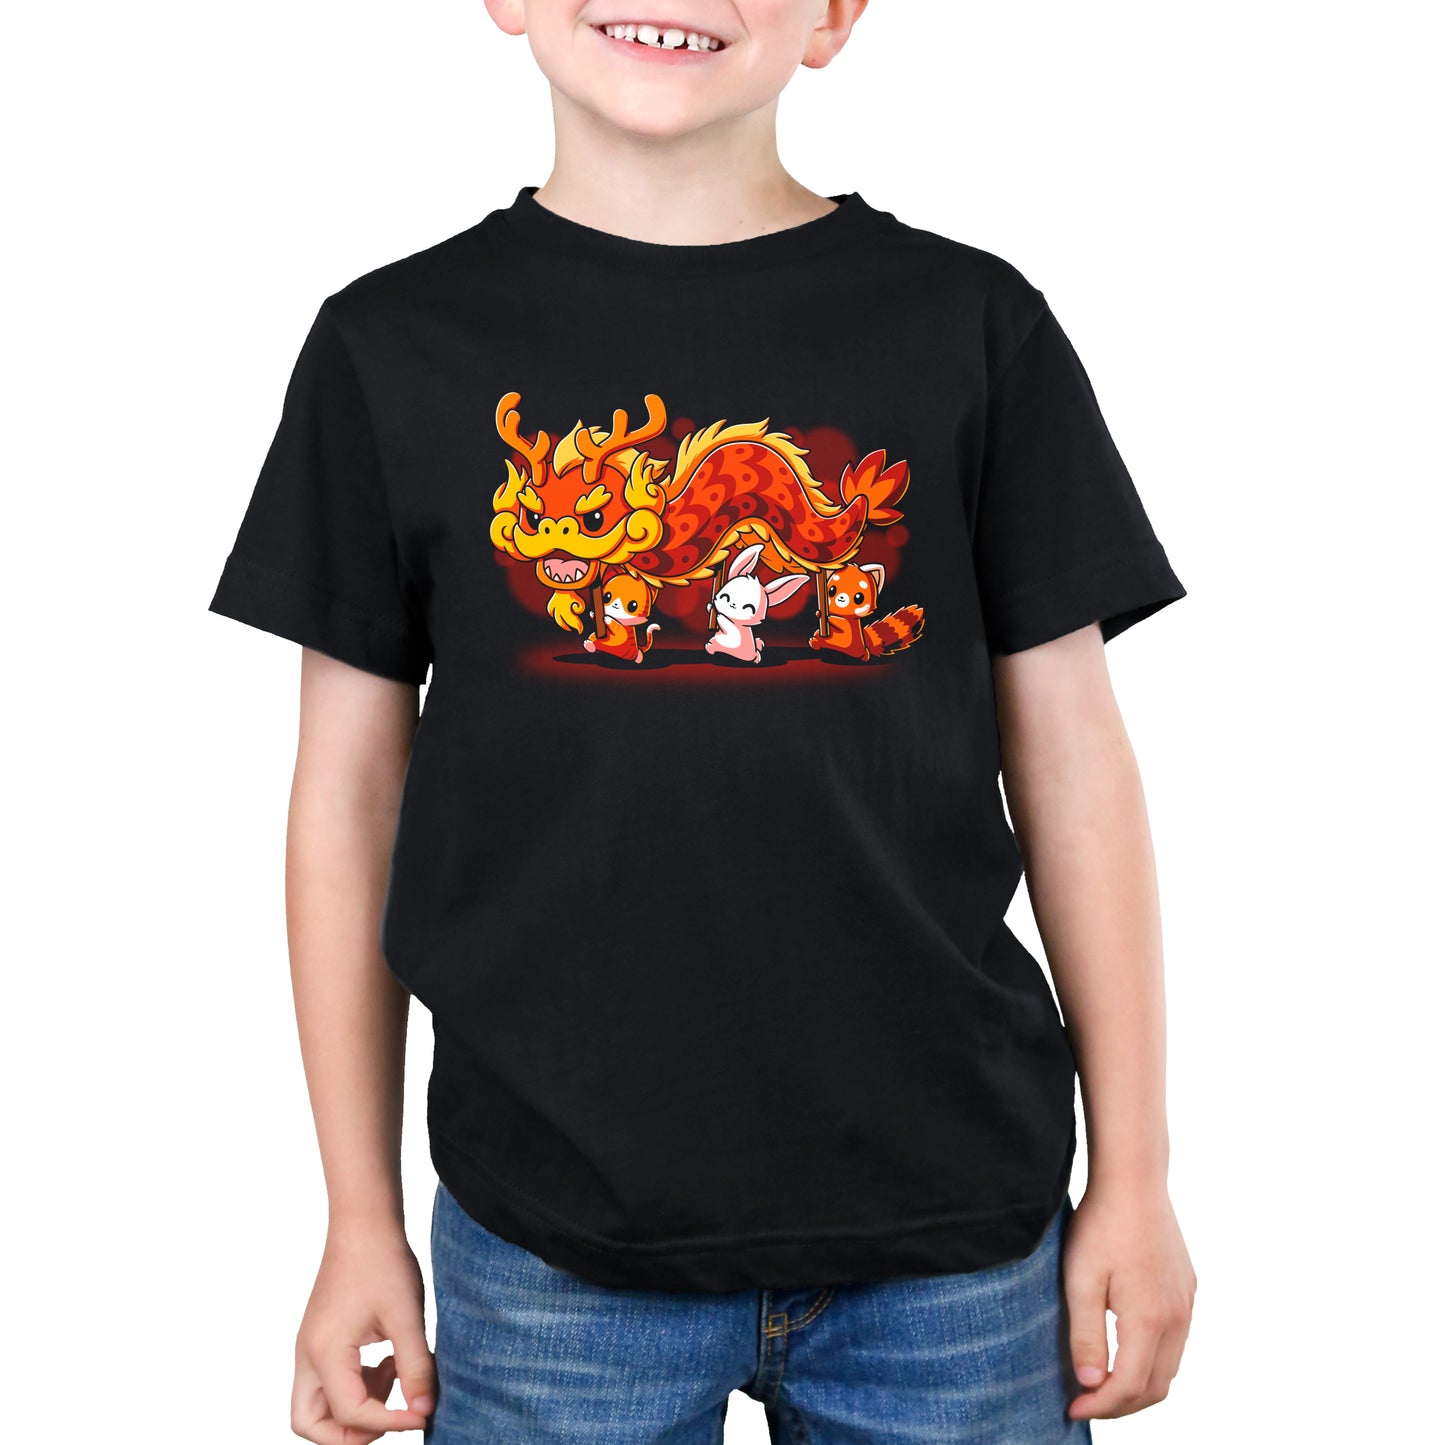 A young boy wearing TeeTurtle's "The Dragon Dance" t-shirt, celebrating Lunar New Year.